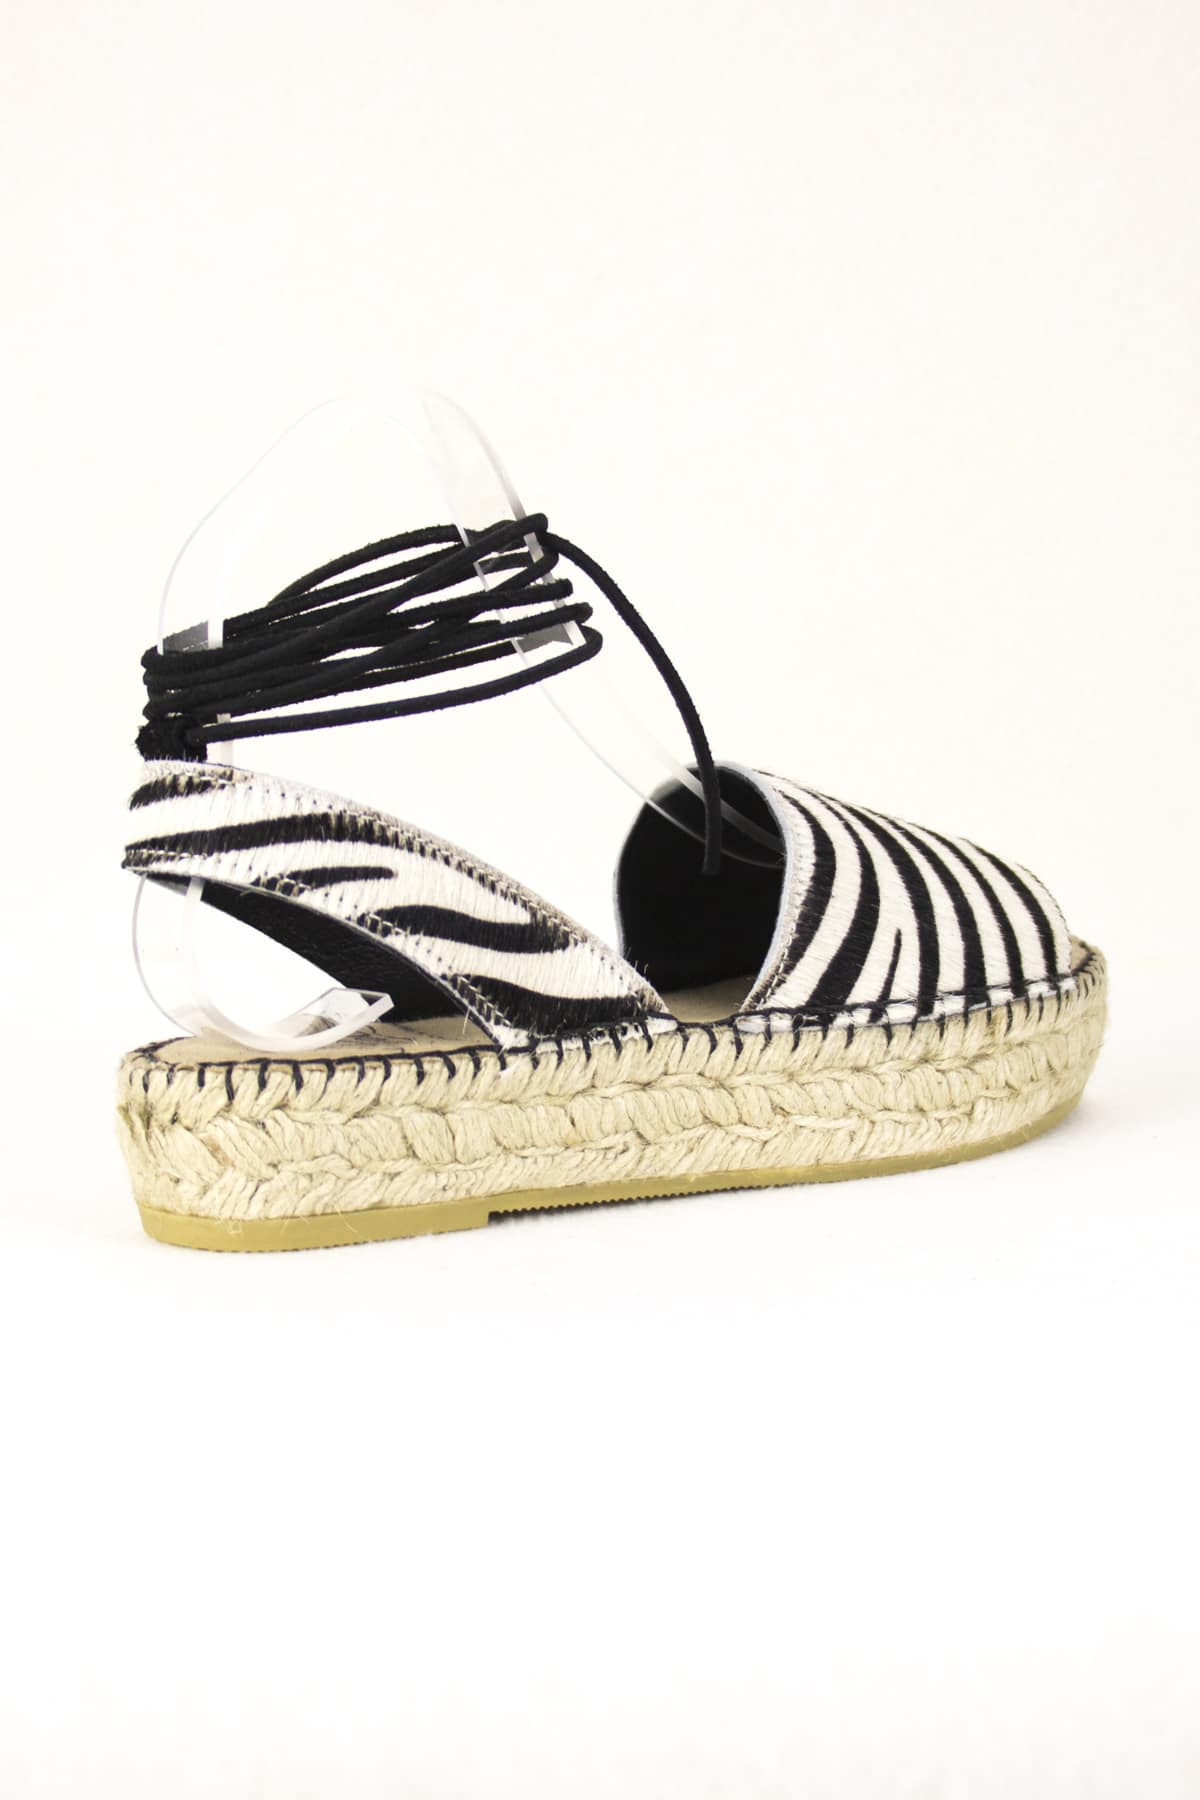 Topshop Espadrille brun-cr\u00e8me motif animal style extravagant Chaussures Sandales Espadrilles 